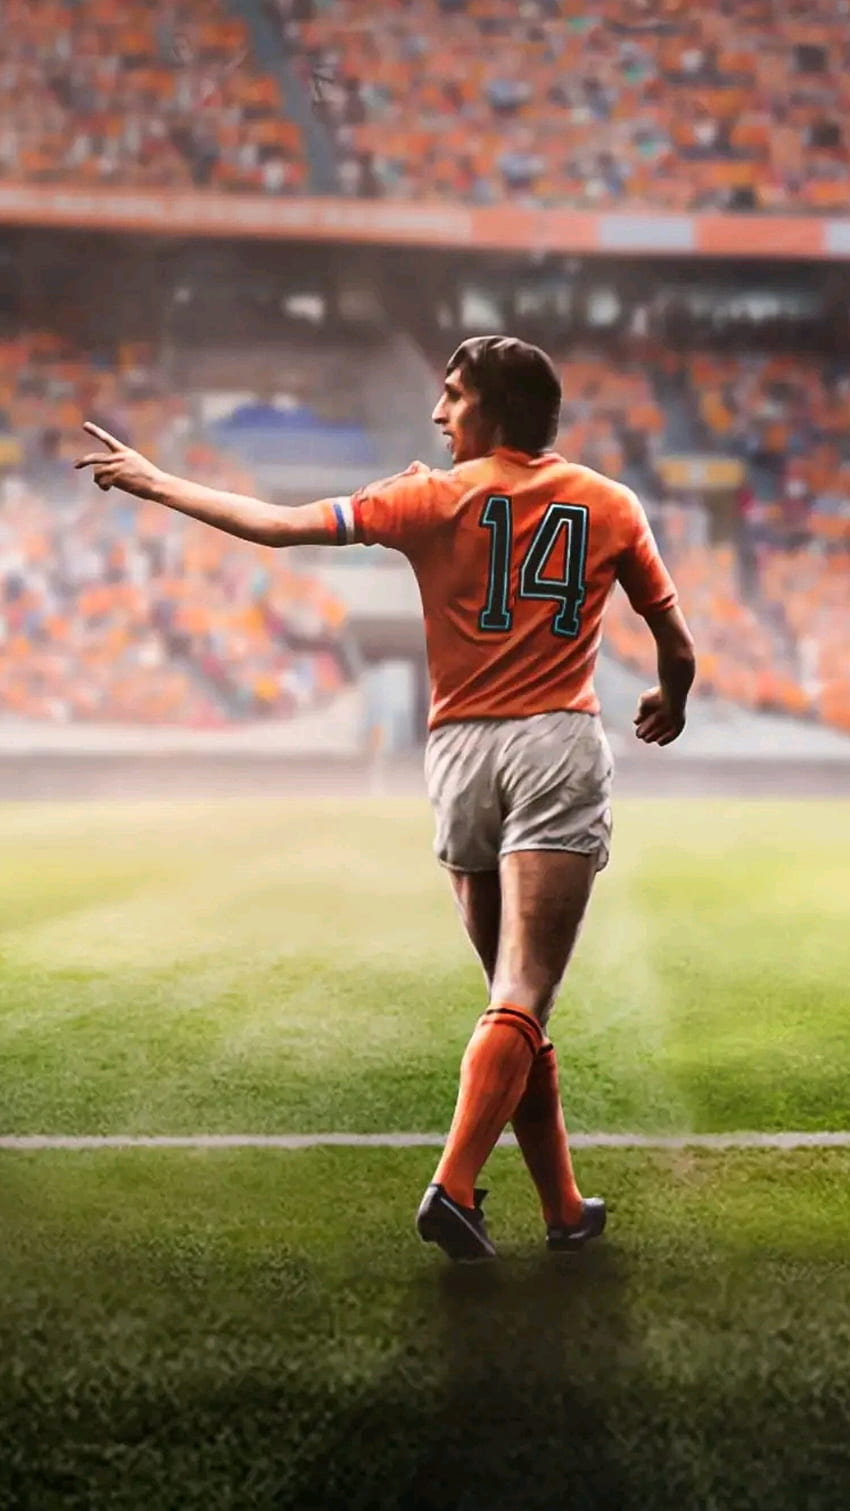 Johan Cruyff, oranye, sepak bola, belanda, 14, sepak bola, pemain wallpaper ponsel HD